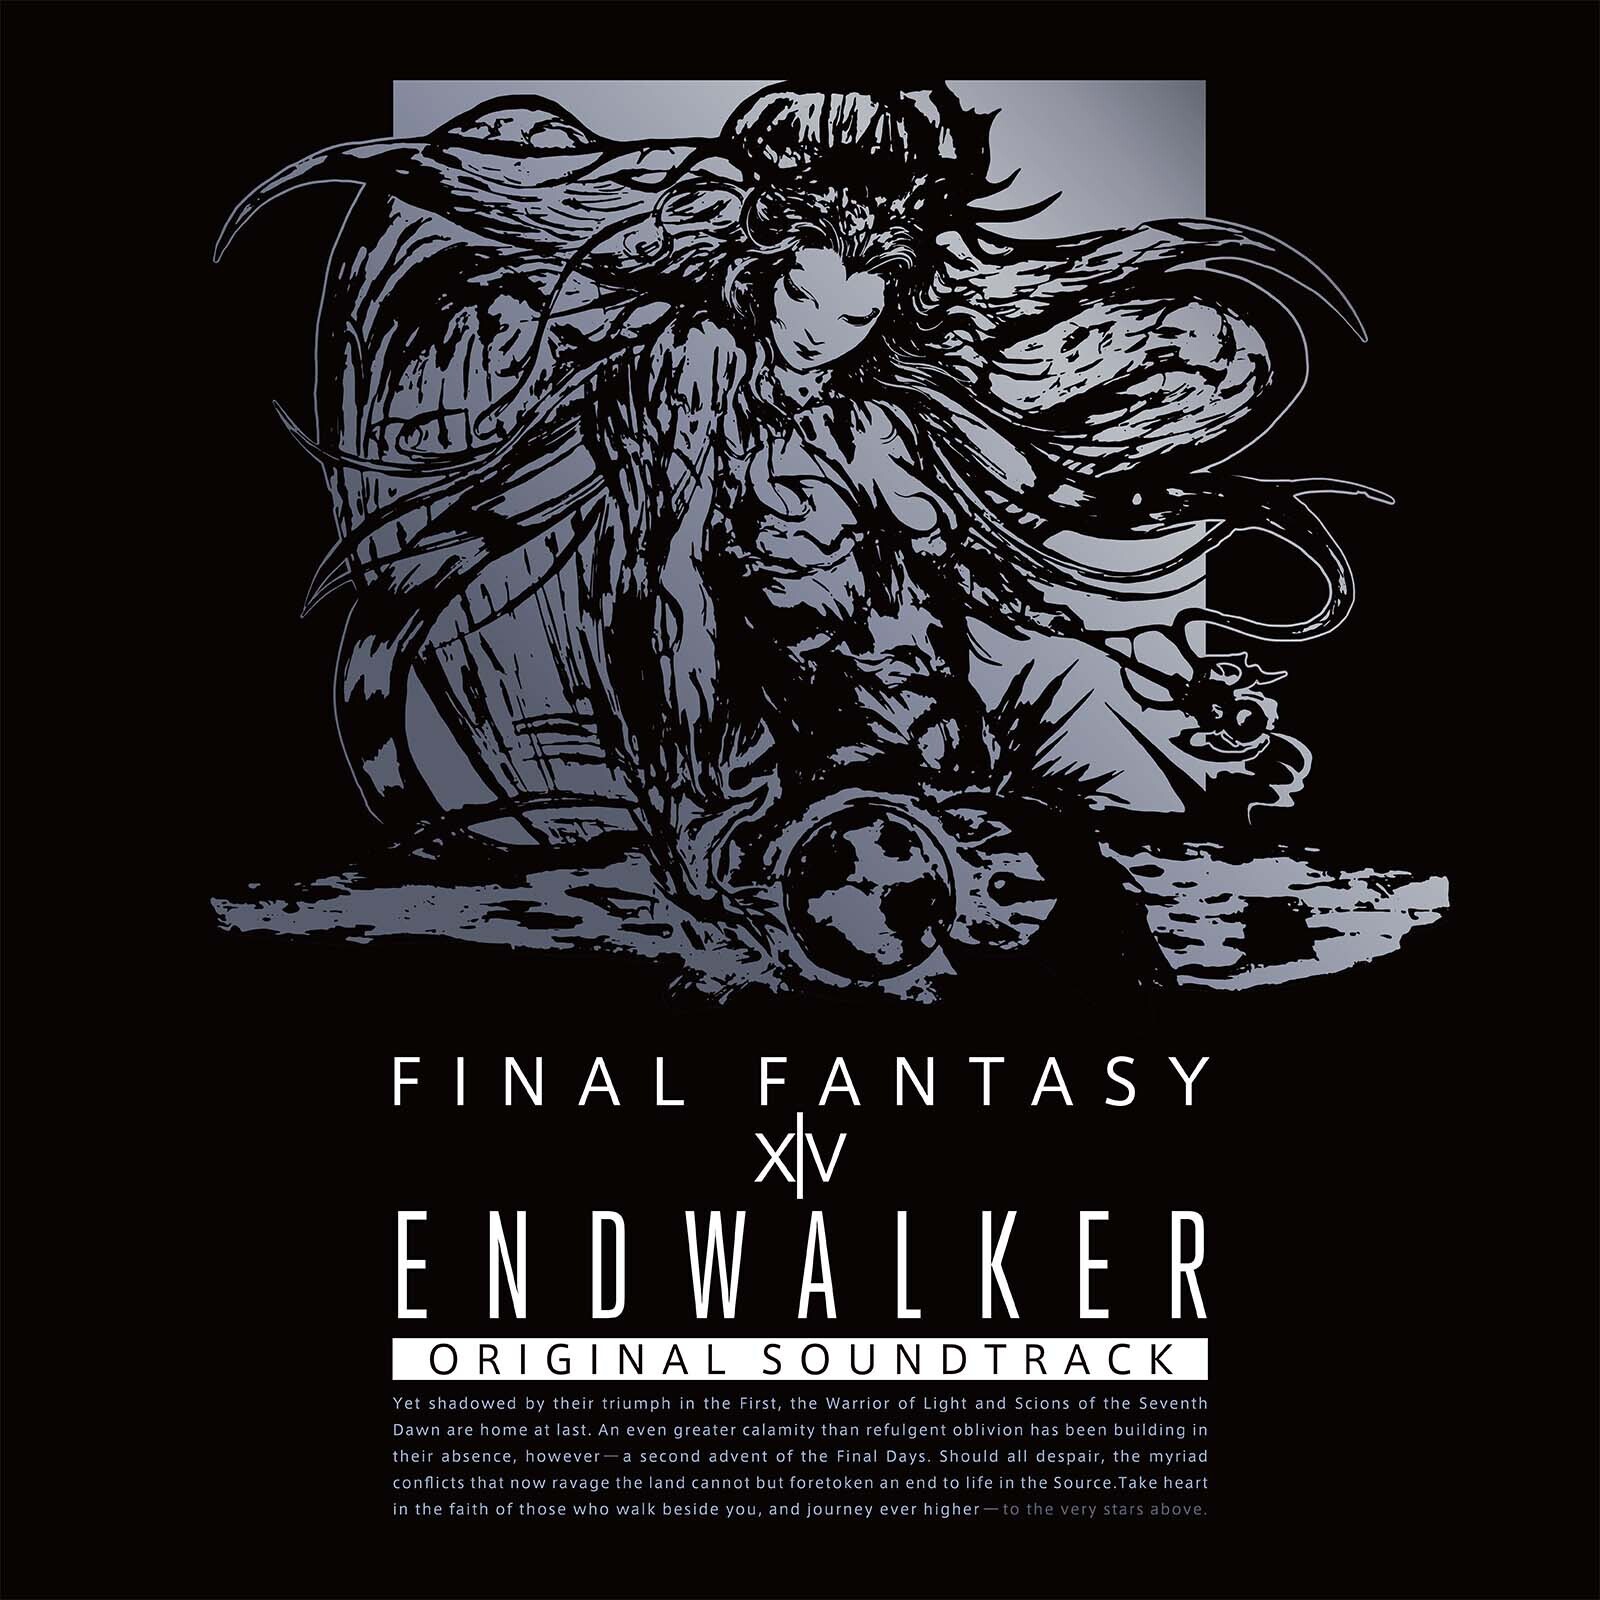 square enix《endwalker final fantasy xiv original soundtrack》hi